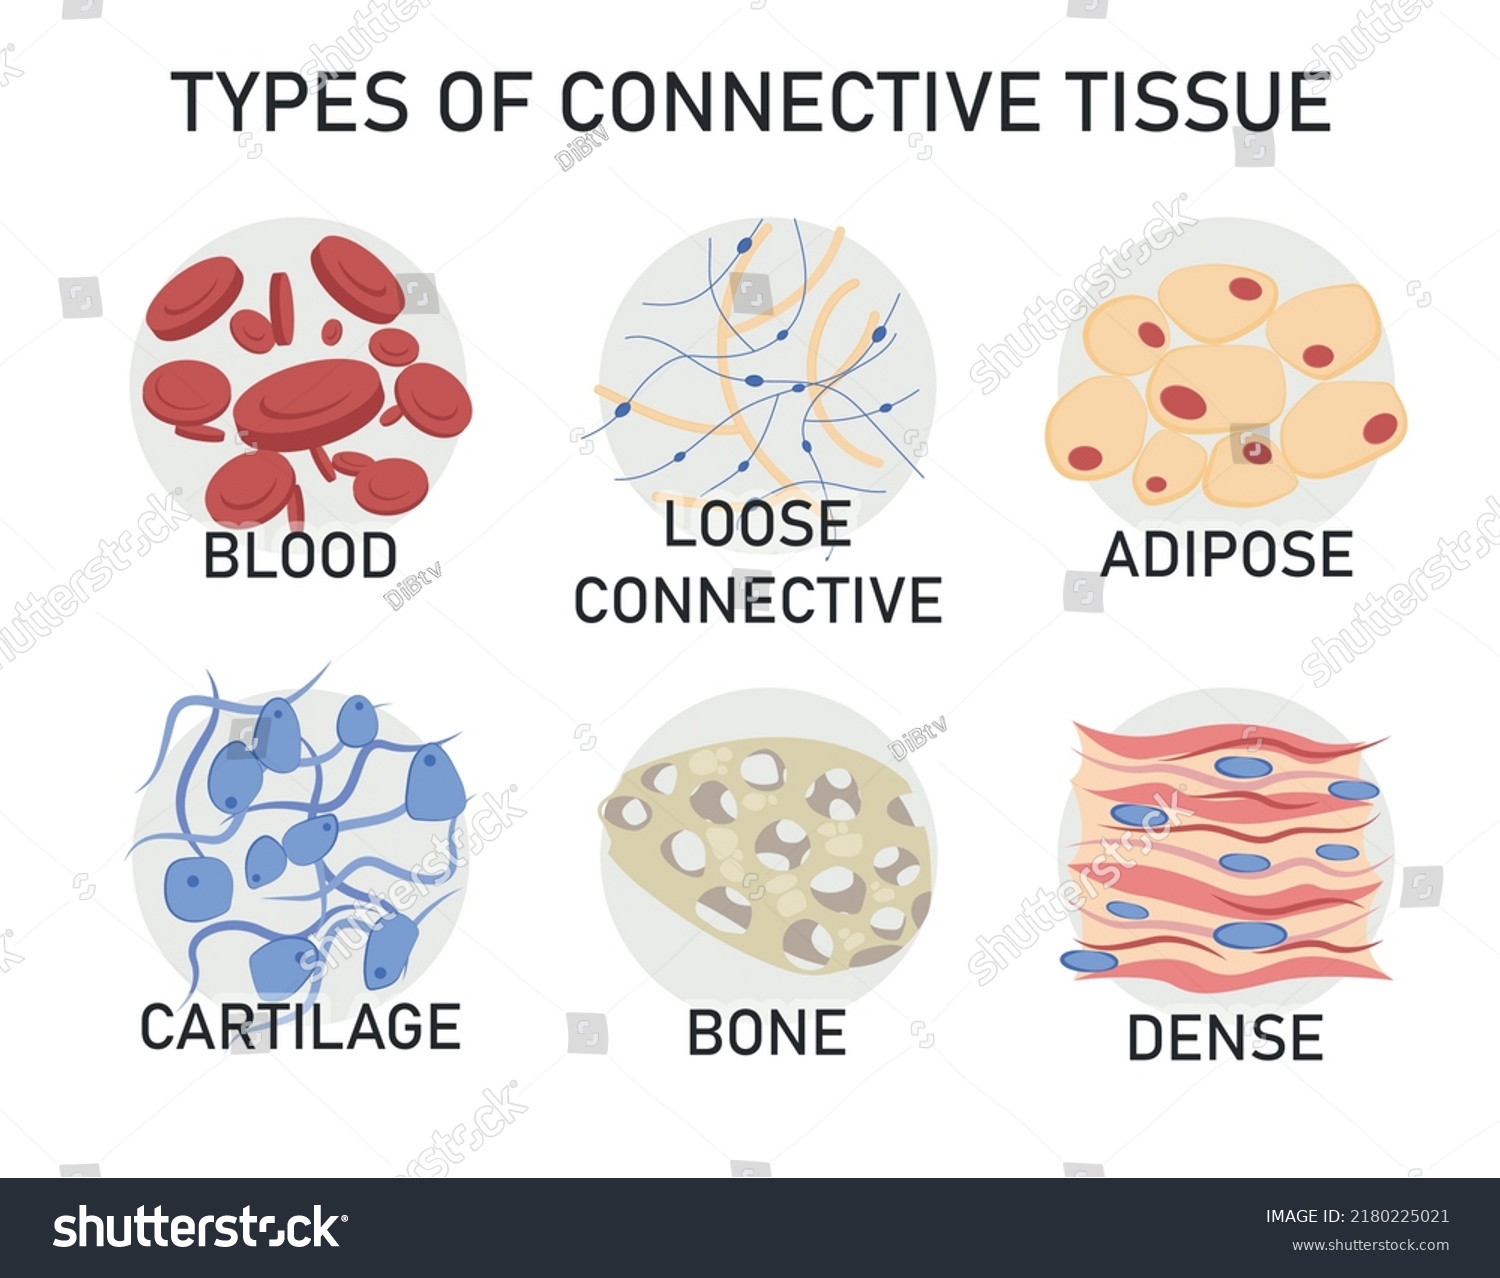 Types Connective Tissue Medical Vector Illustrations vetor stock